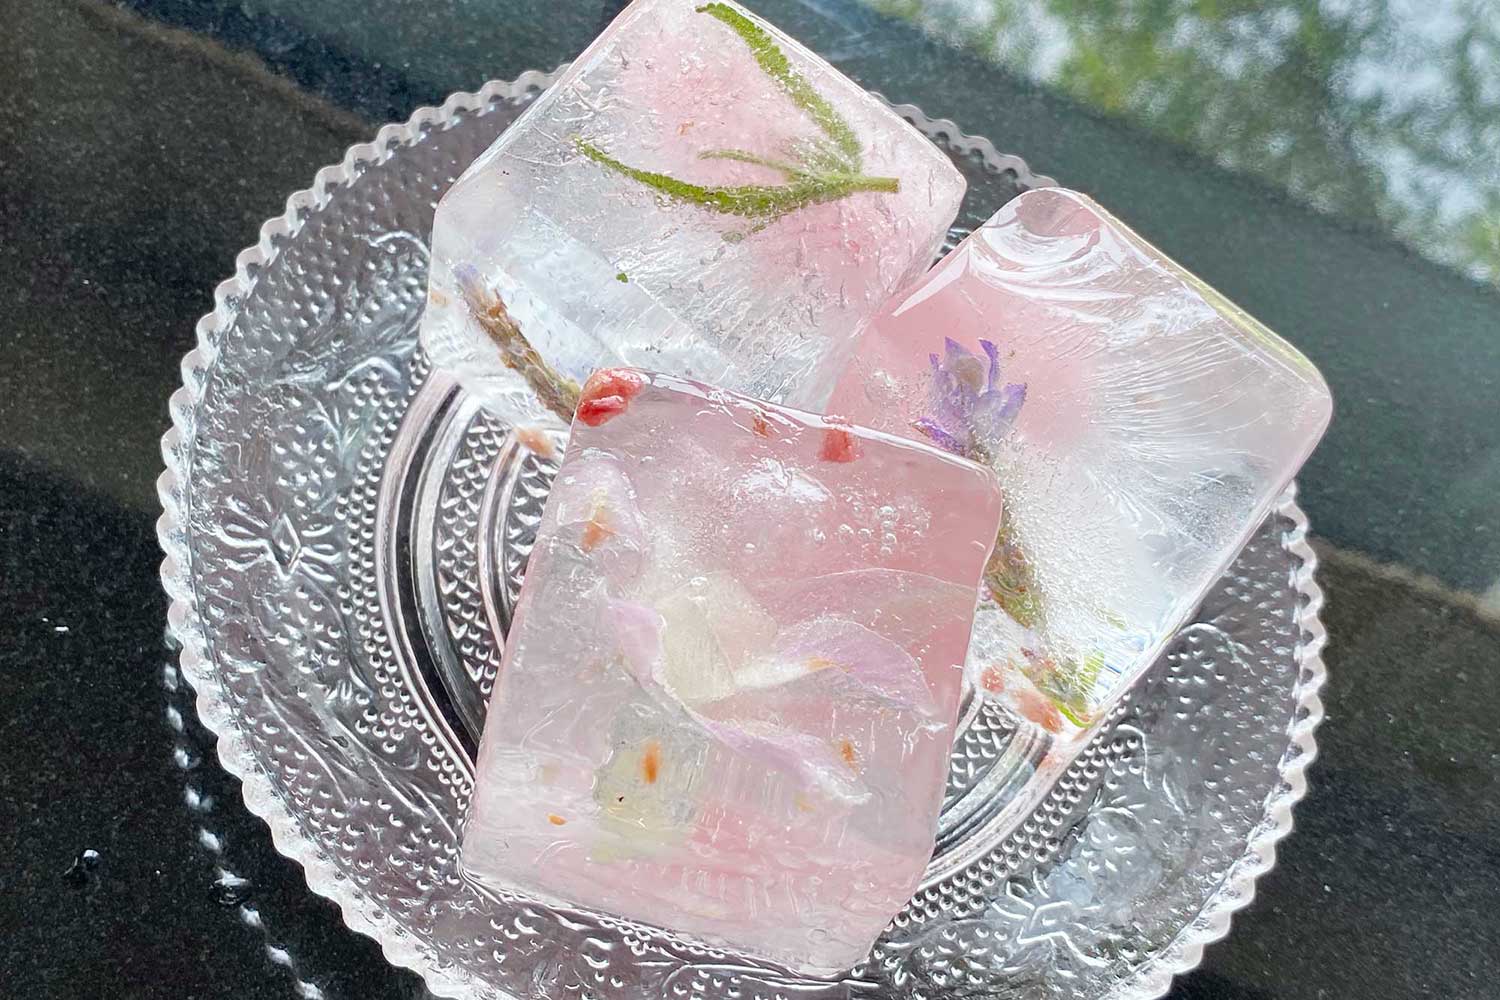 Raspberry pale pink ice